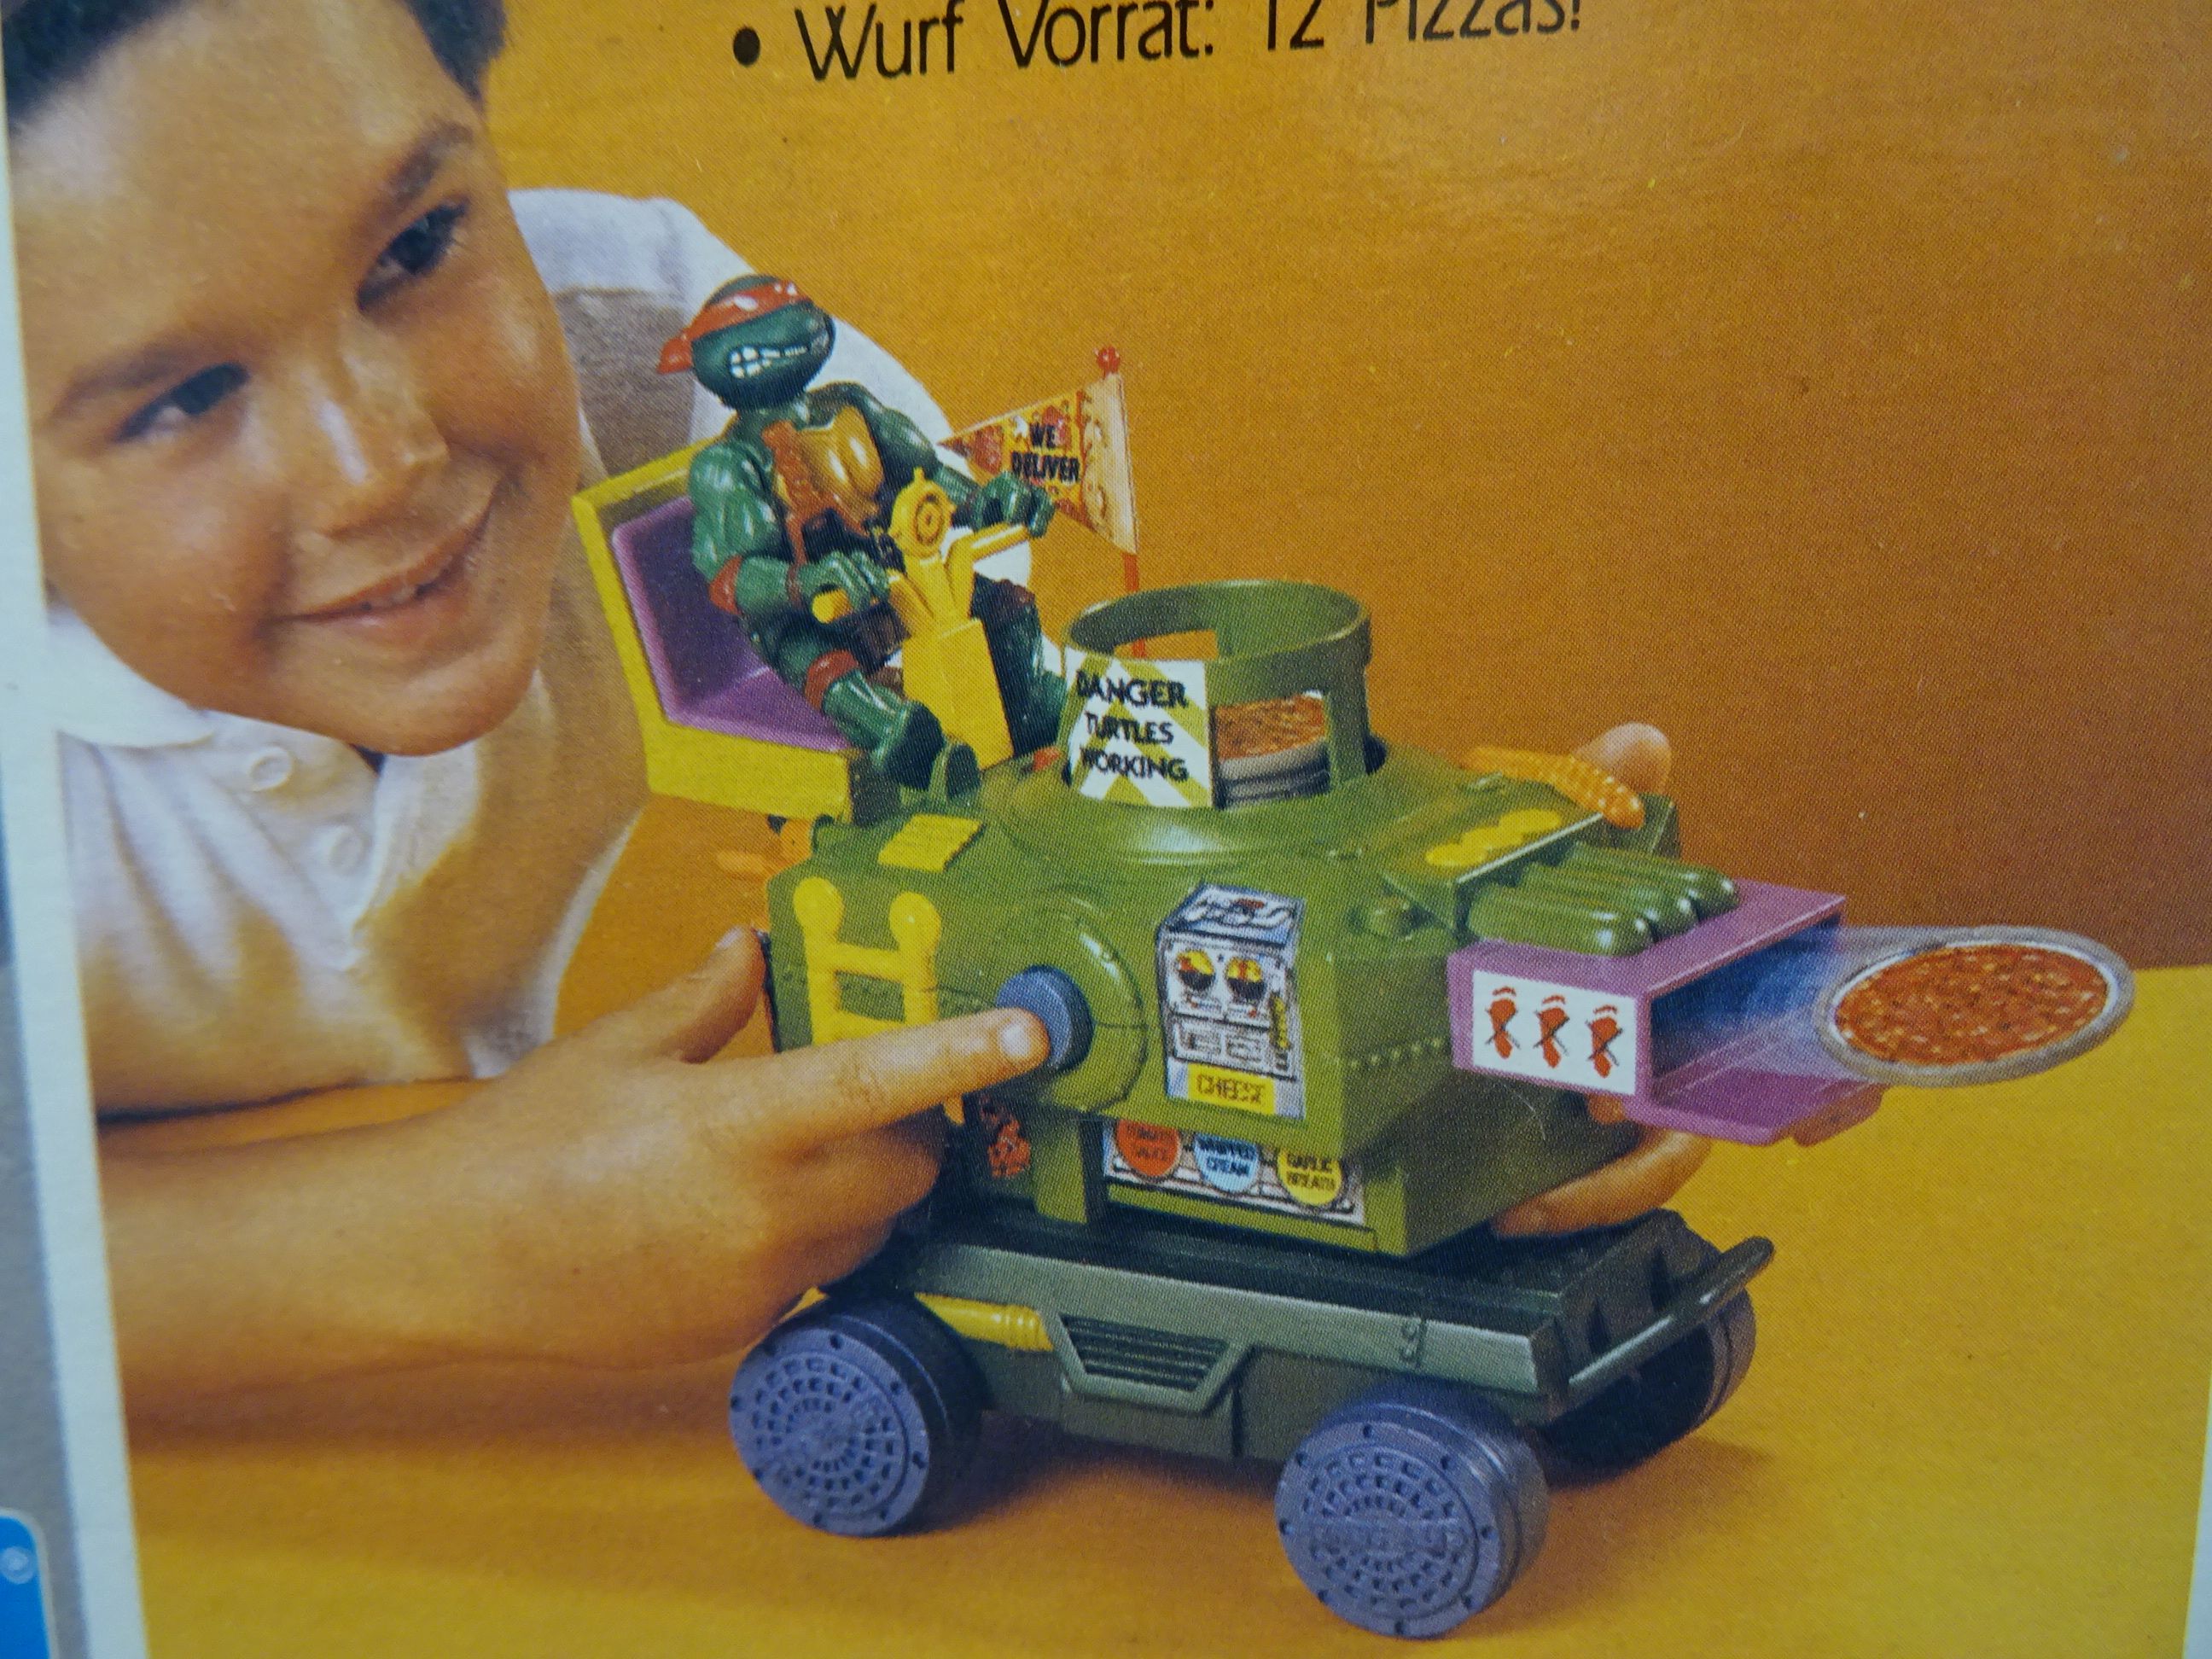 Original boxed Playmates Bandai Teenage Mutant Ninja Turtles Pizza Thrower vehicle, appearing to - Image 2 of 3